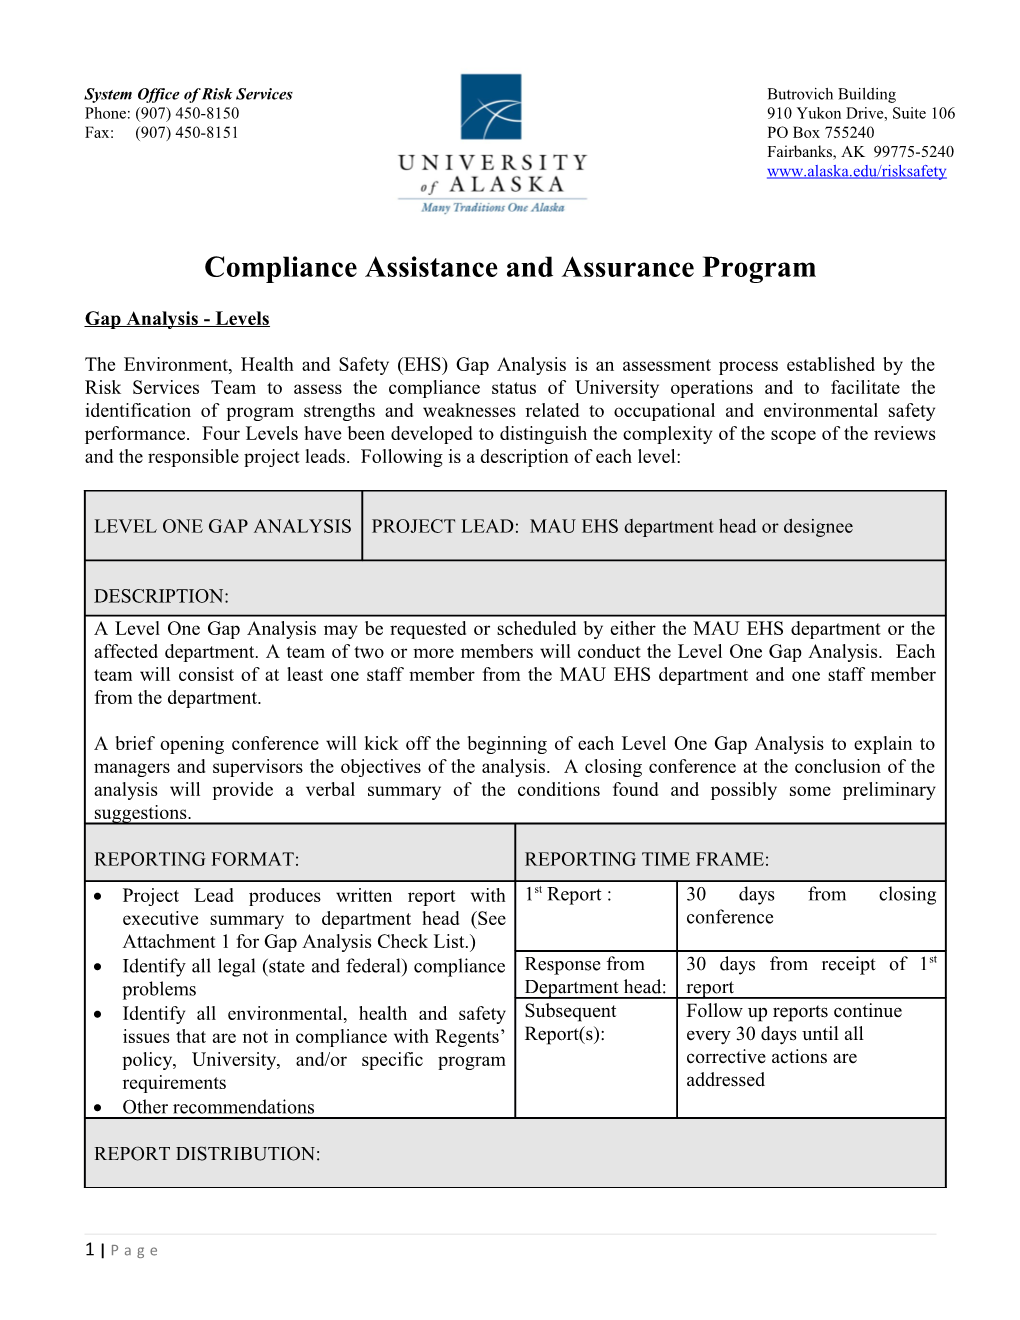 Compliance Assistance and Assurance Program